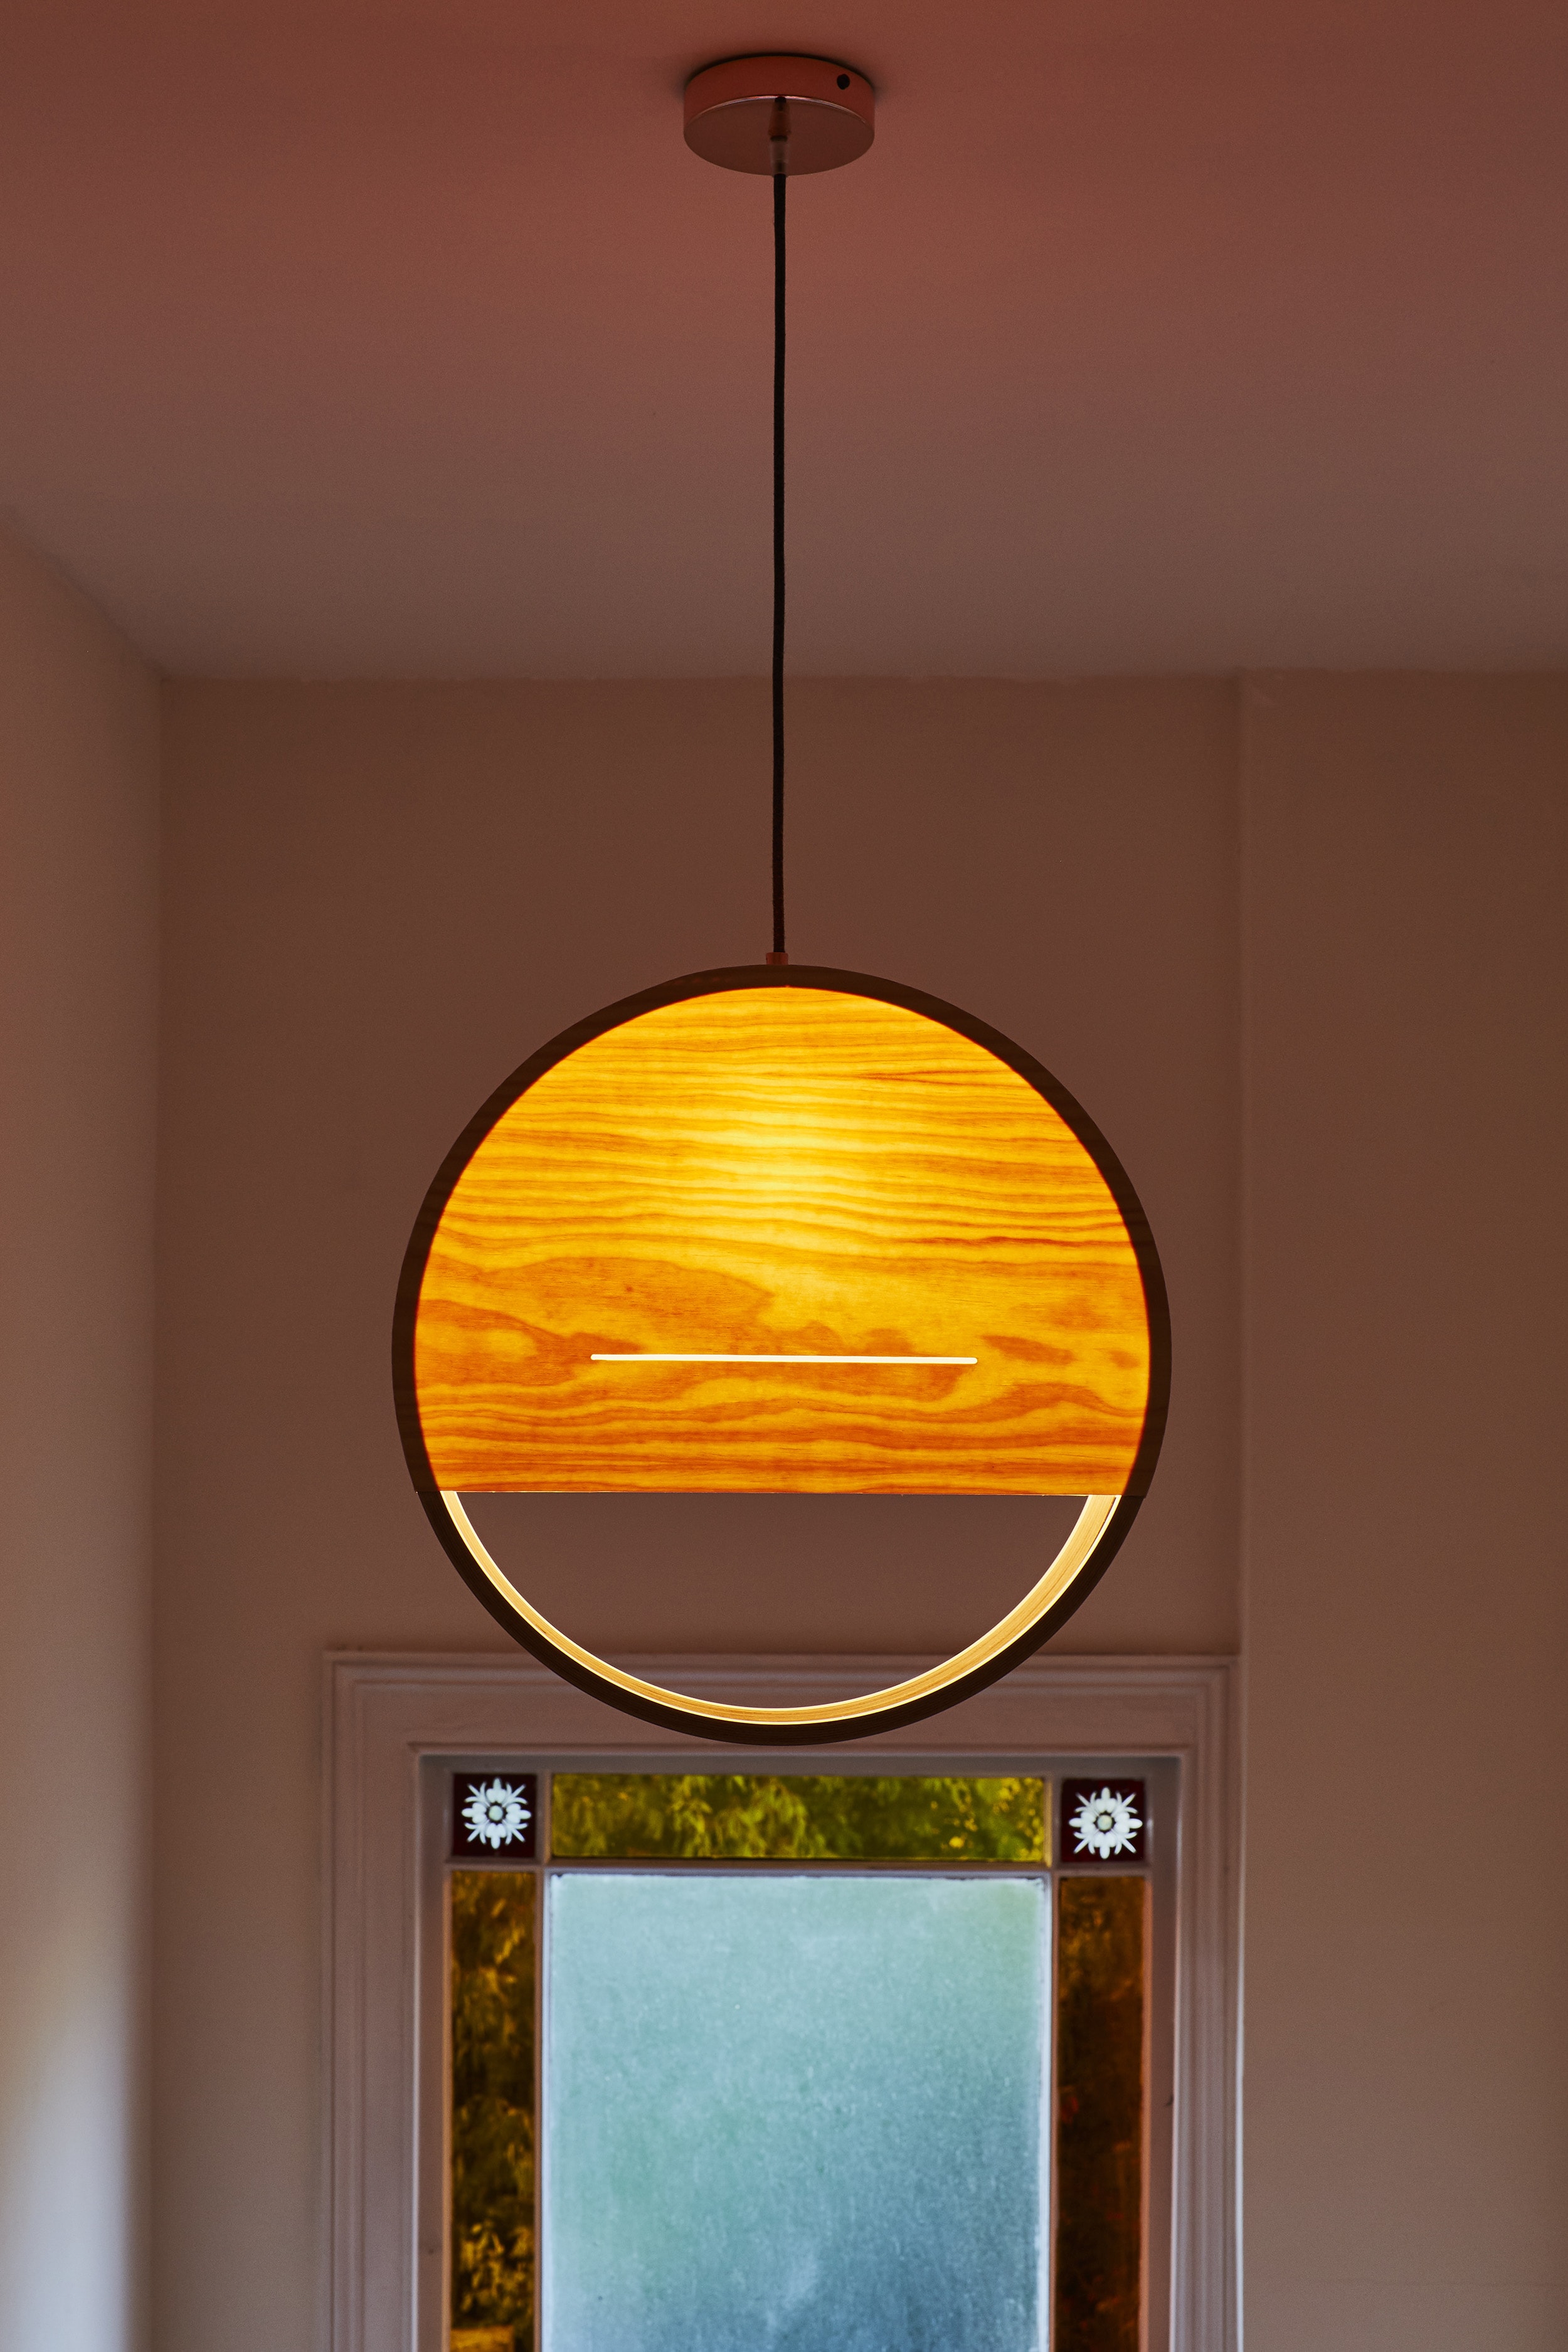 Lozi - Bespoke Plywood Furniture - Focus On : The Sunset Lamp